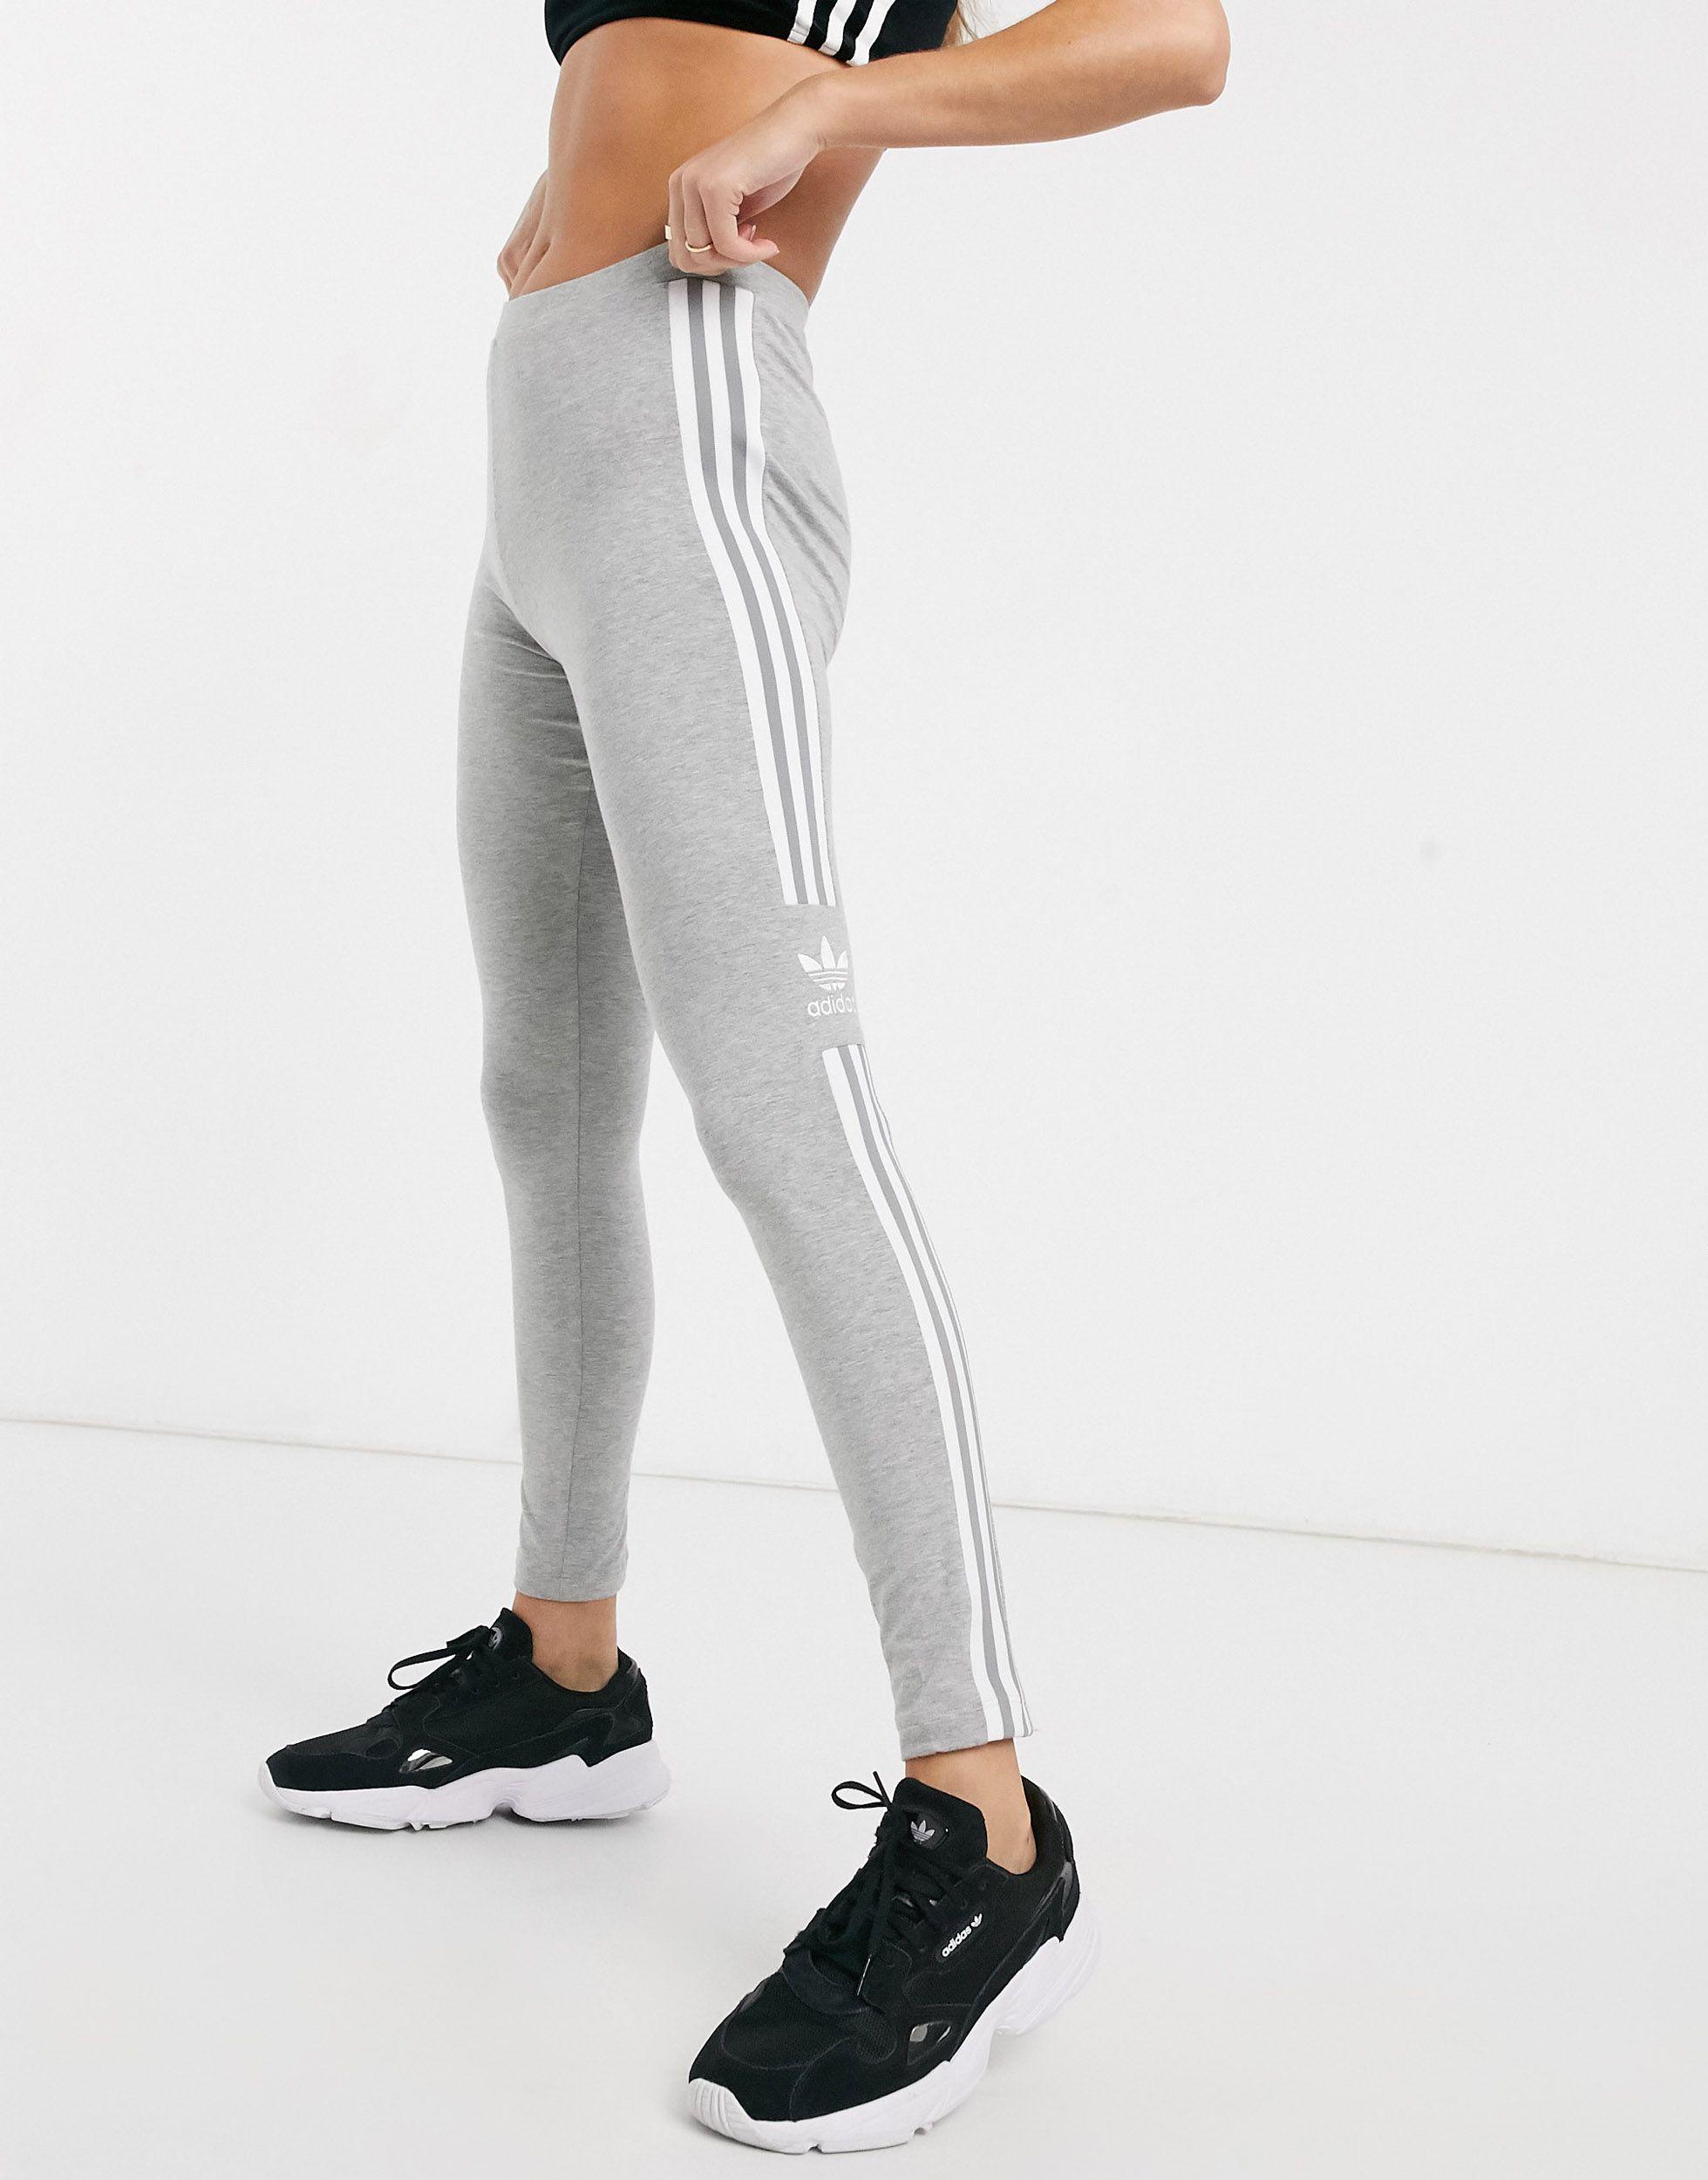 adidas Originals Cotton Locked Up Logo leggings in Grey (Gray) - Lyst